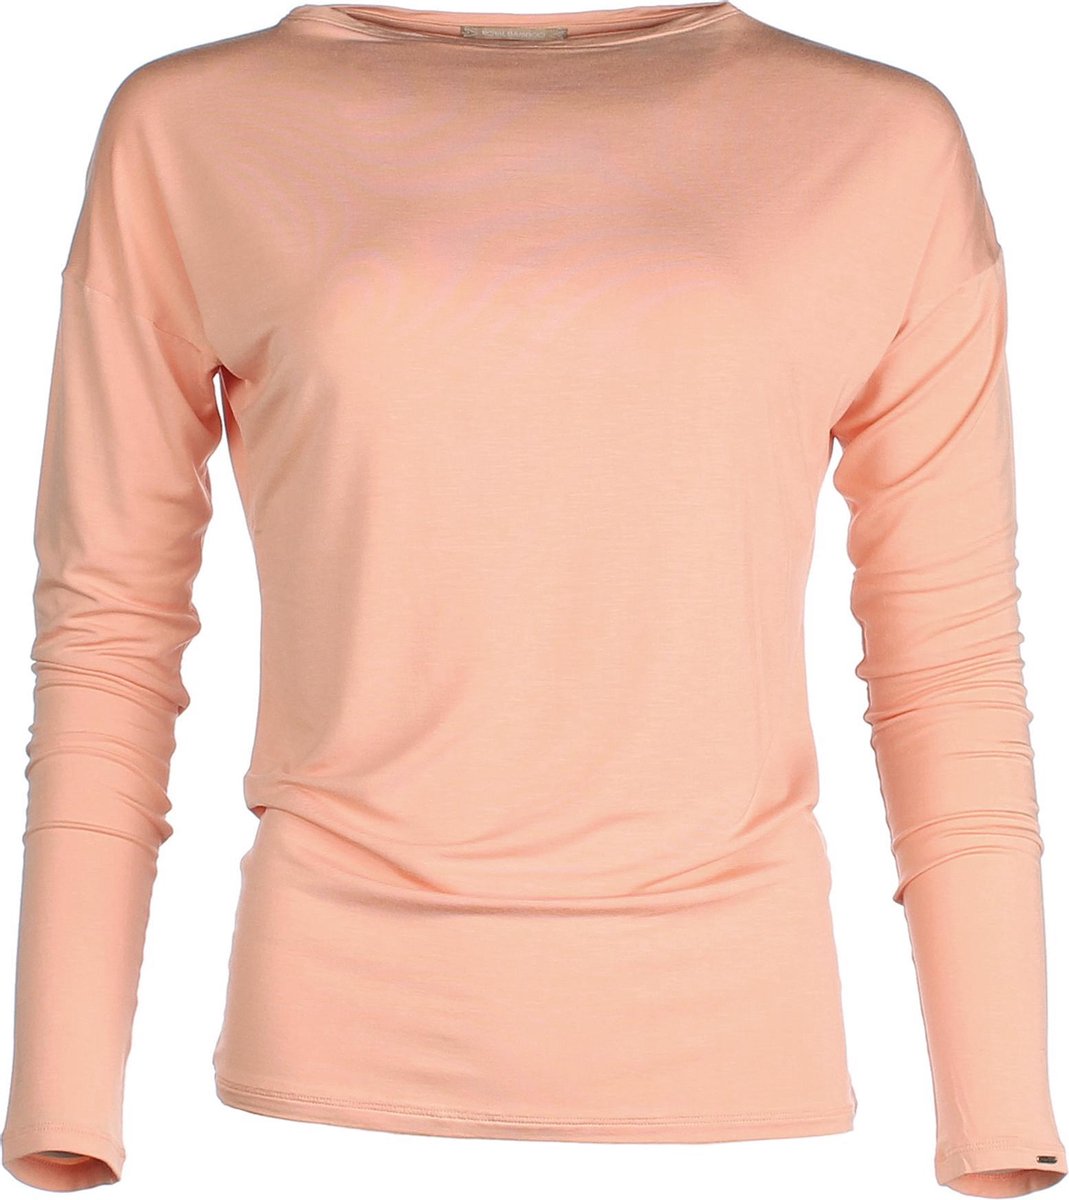 The Vintage Longsleeve Shirt - Apricot (zalm) - XLarge - bamboe kleding dames